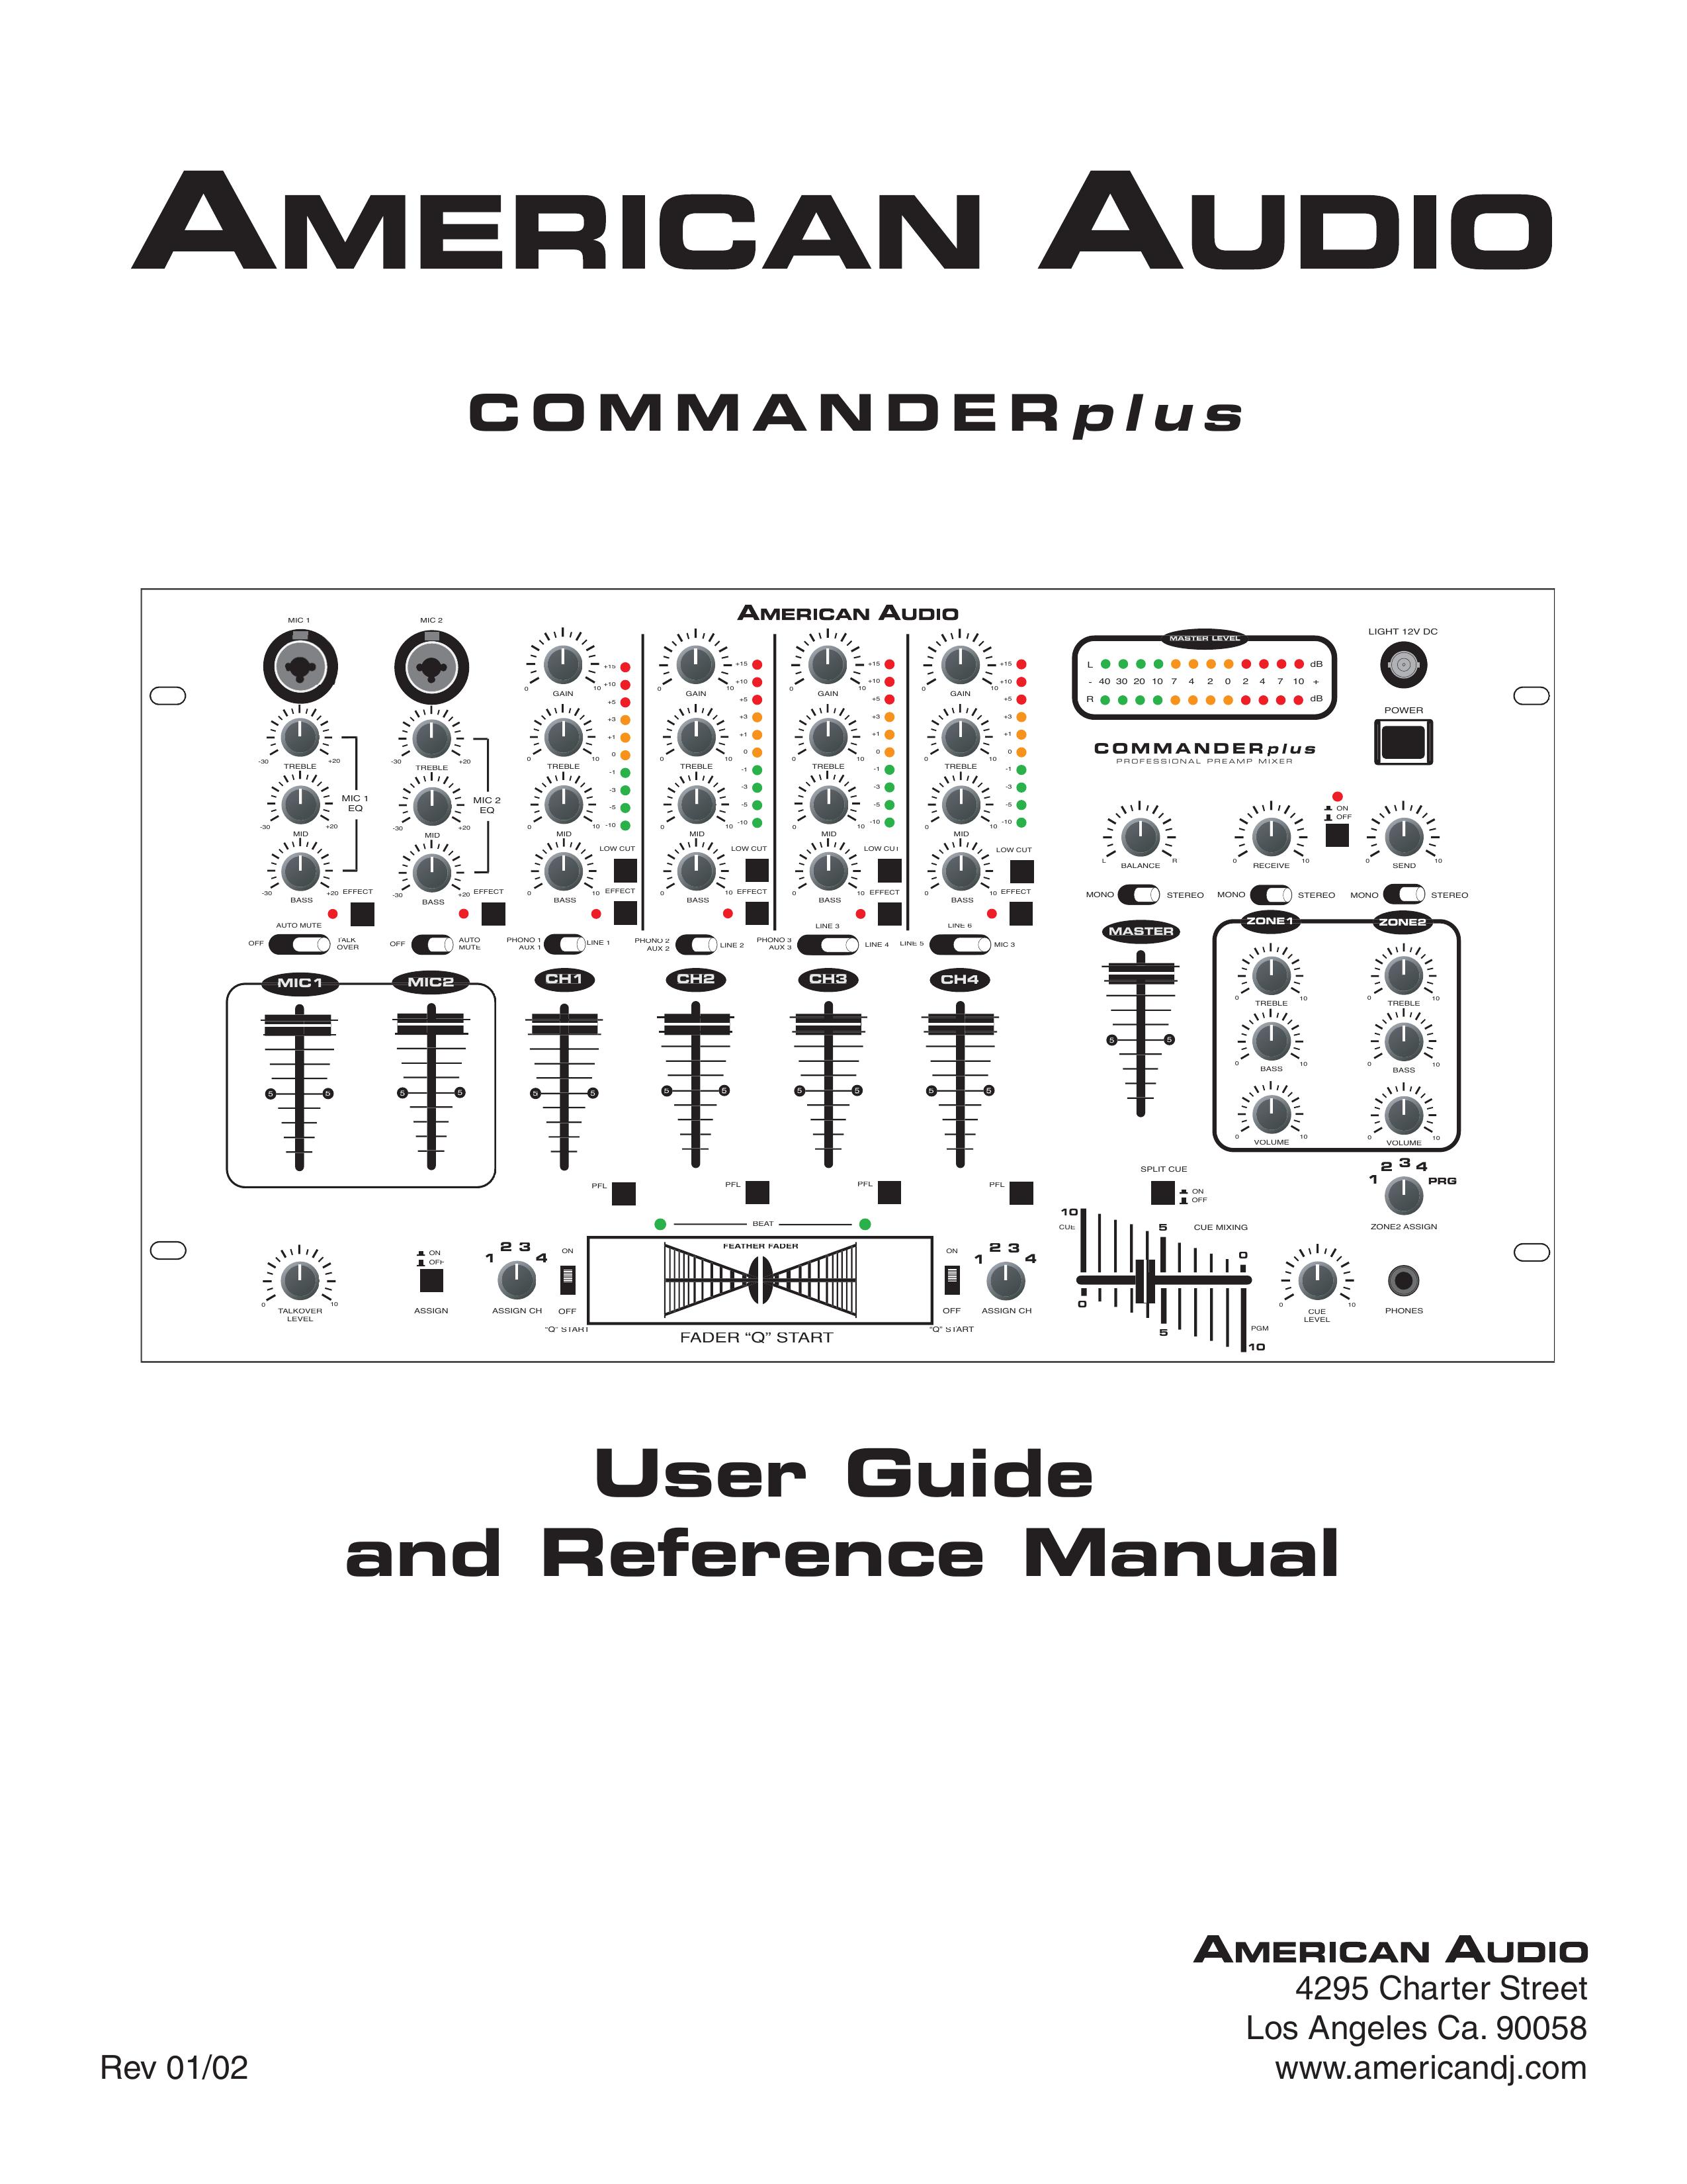 American Audio CommanderPlus Music Mixer User Manual